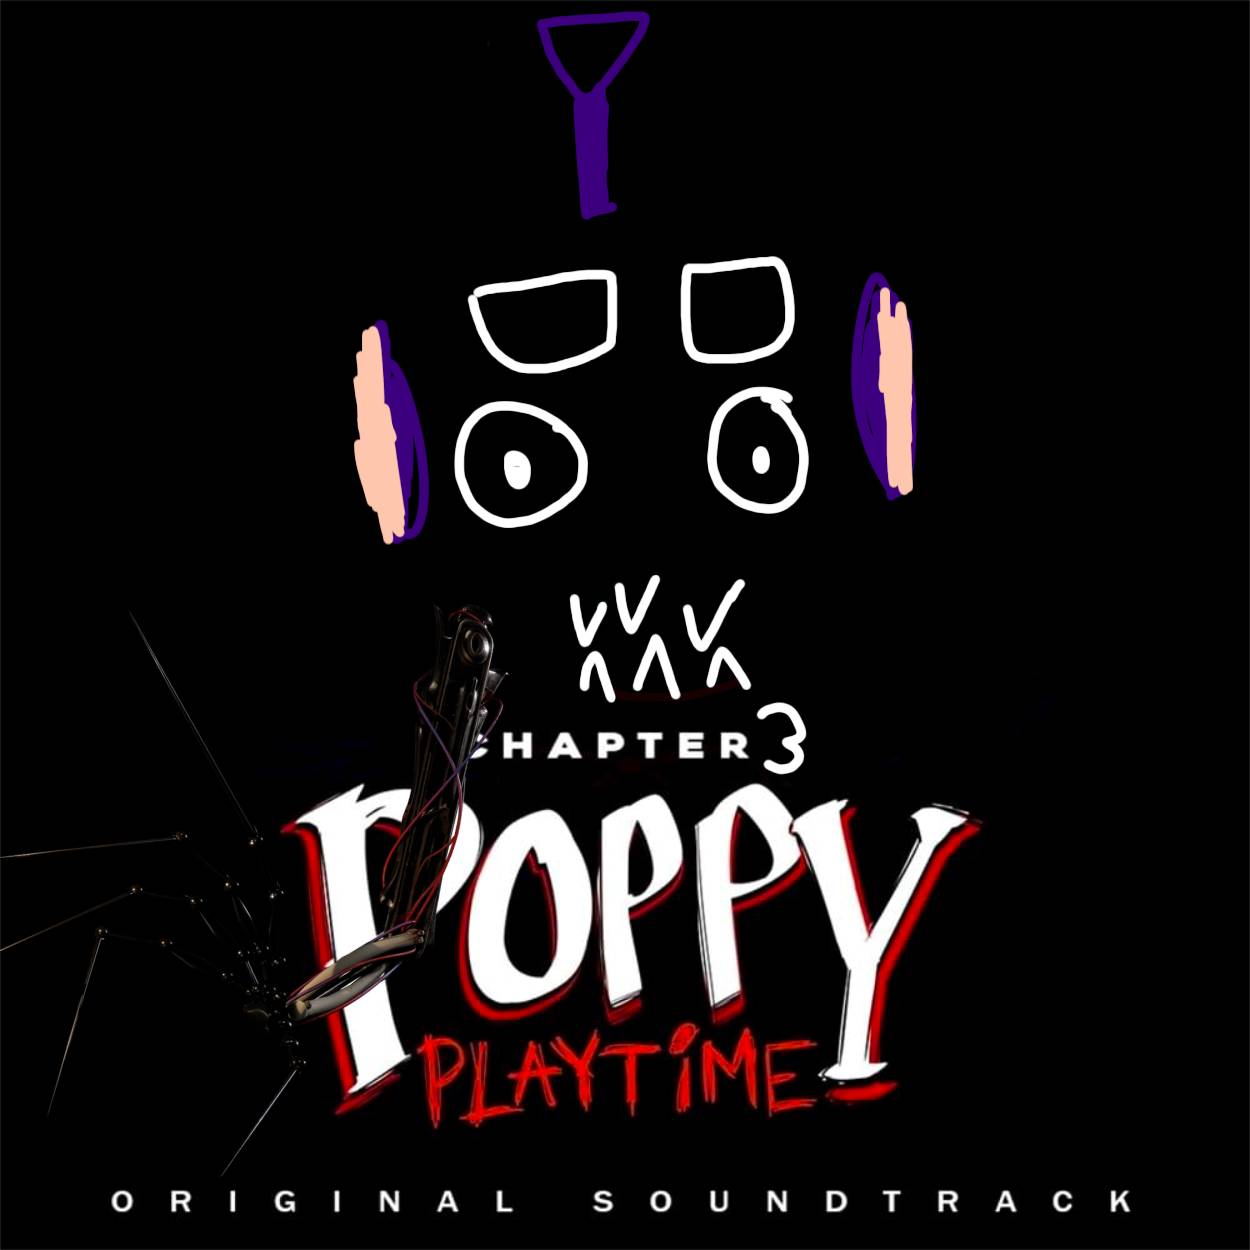 Poppy Playtime chapter 3!? Weram? by SyahrulRamadhank02 on DeviantArt